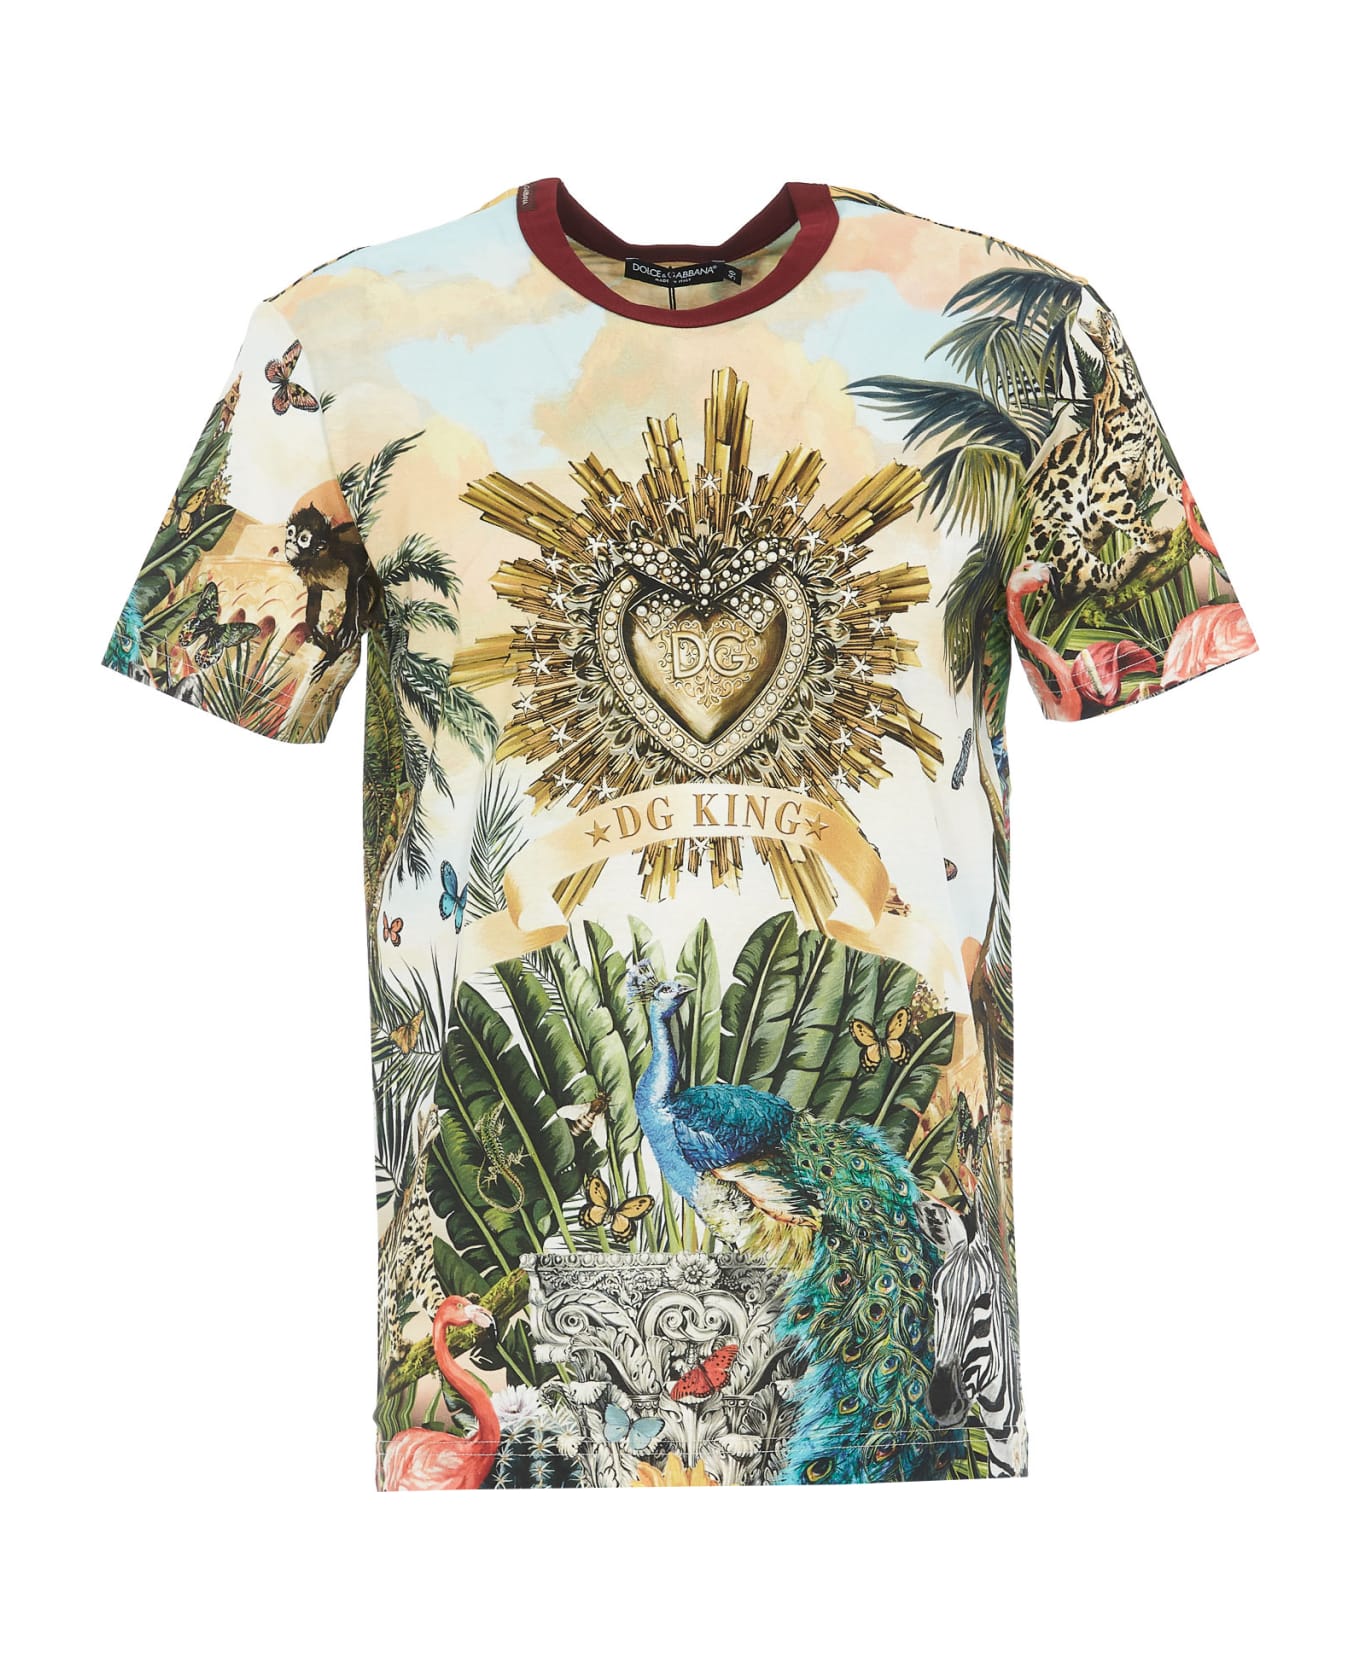 Dolce & Gabbana Tropico Dg King Print T-shirt | italist, ALWAYS LIKE A SALE